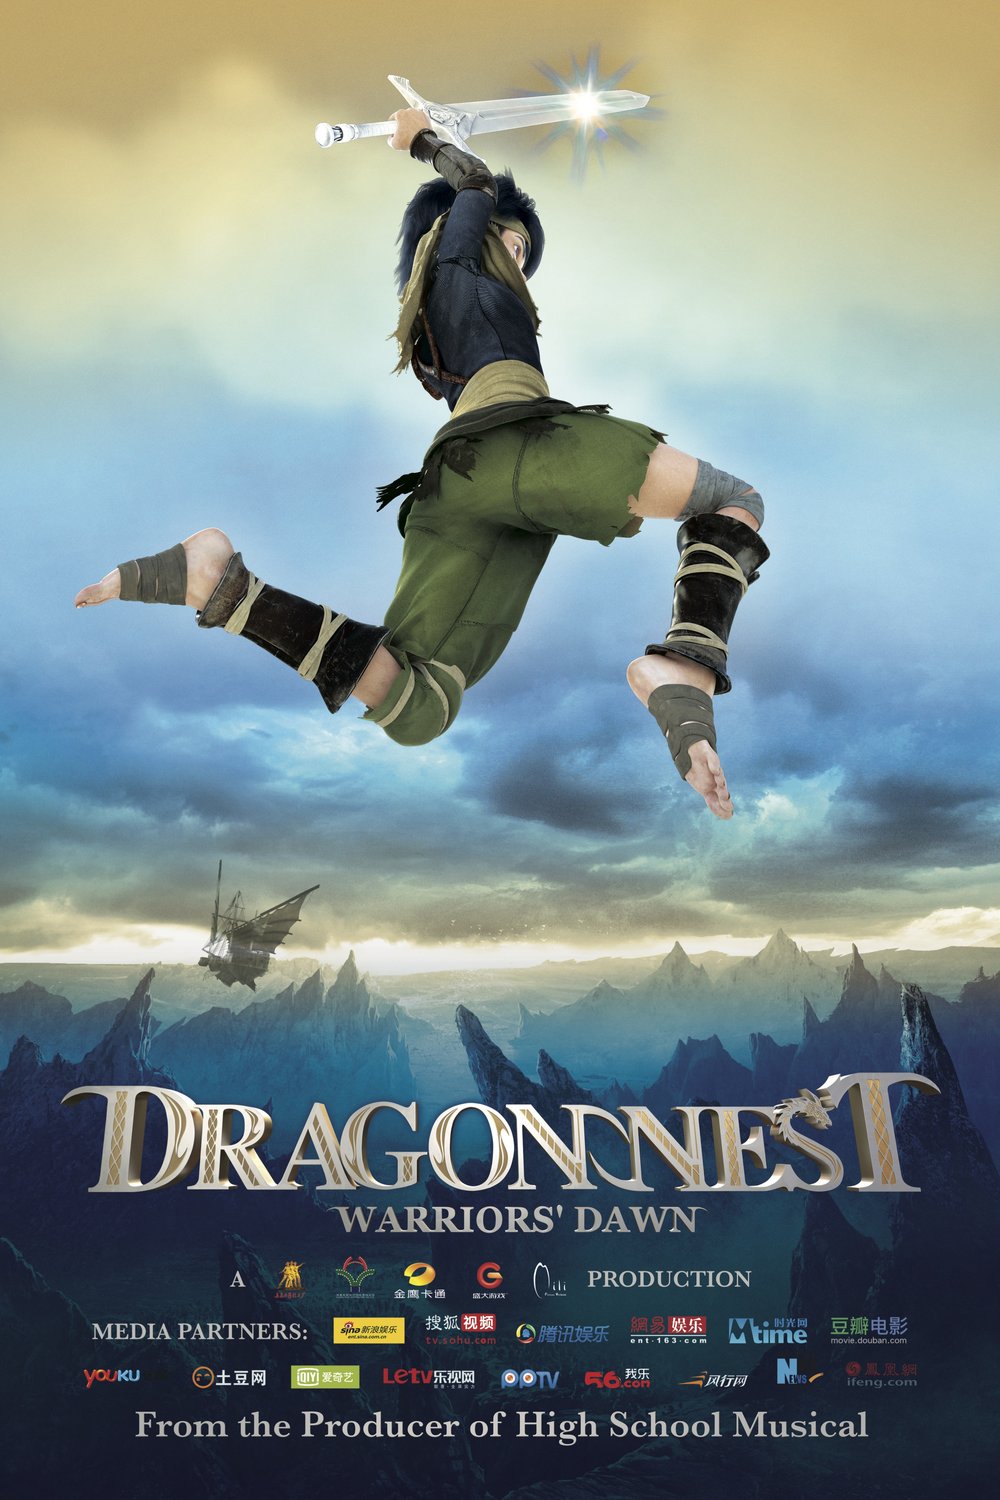 L'affiche du film Dragon Nest: Warriors' Dawn